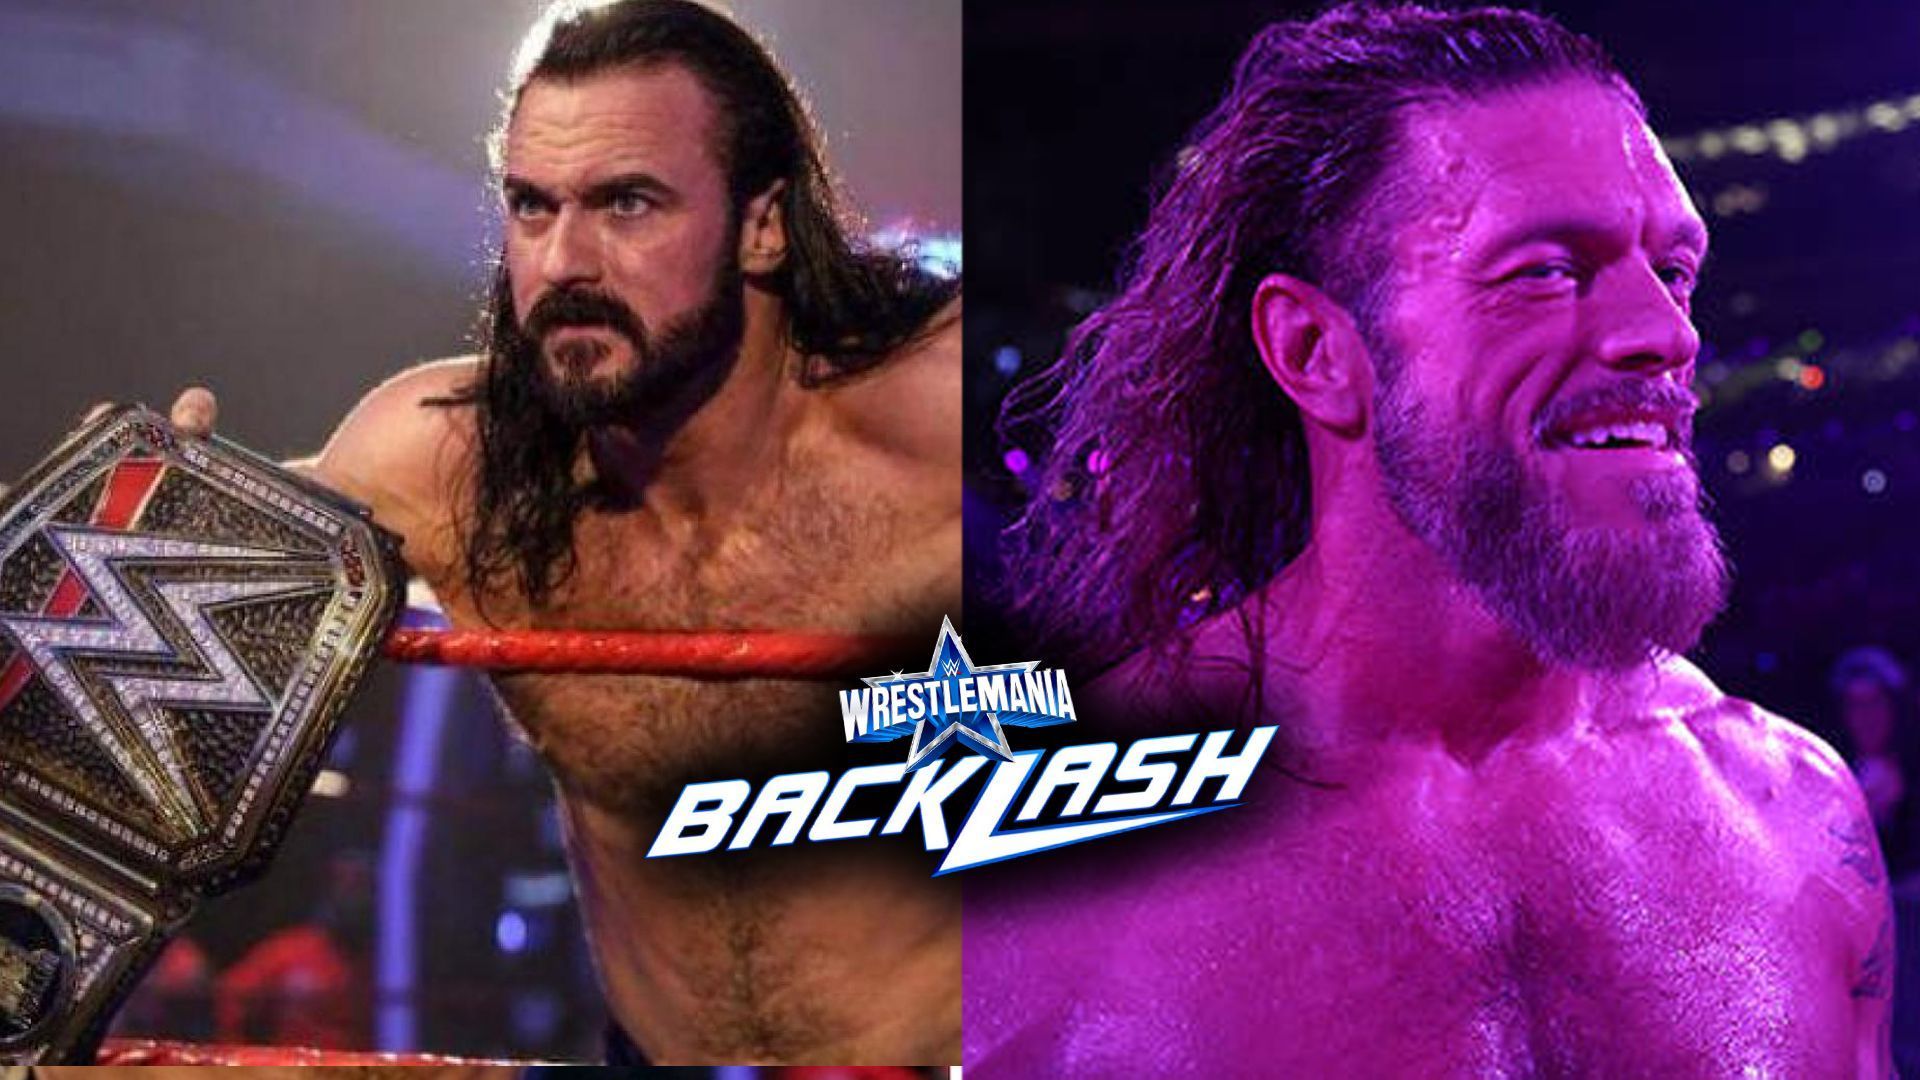 A lot can happen at WWE WrestleMania Backlash 2022!